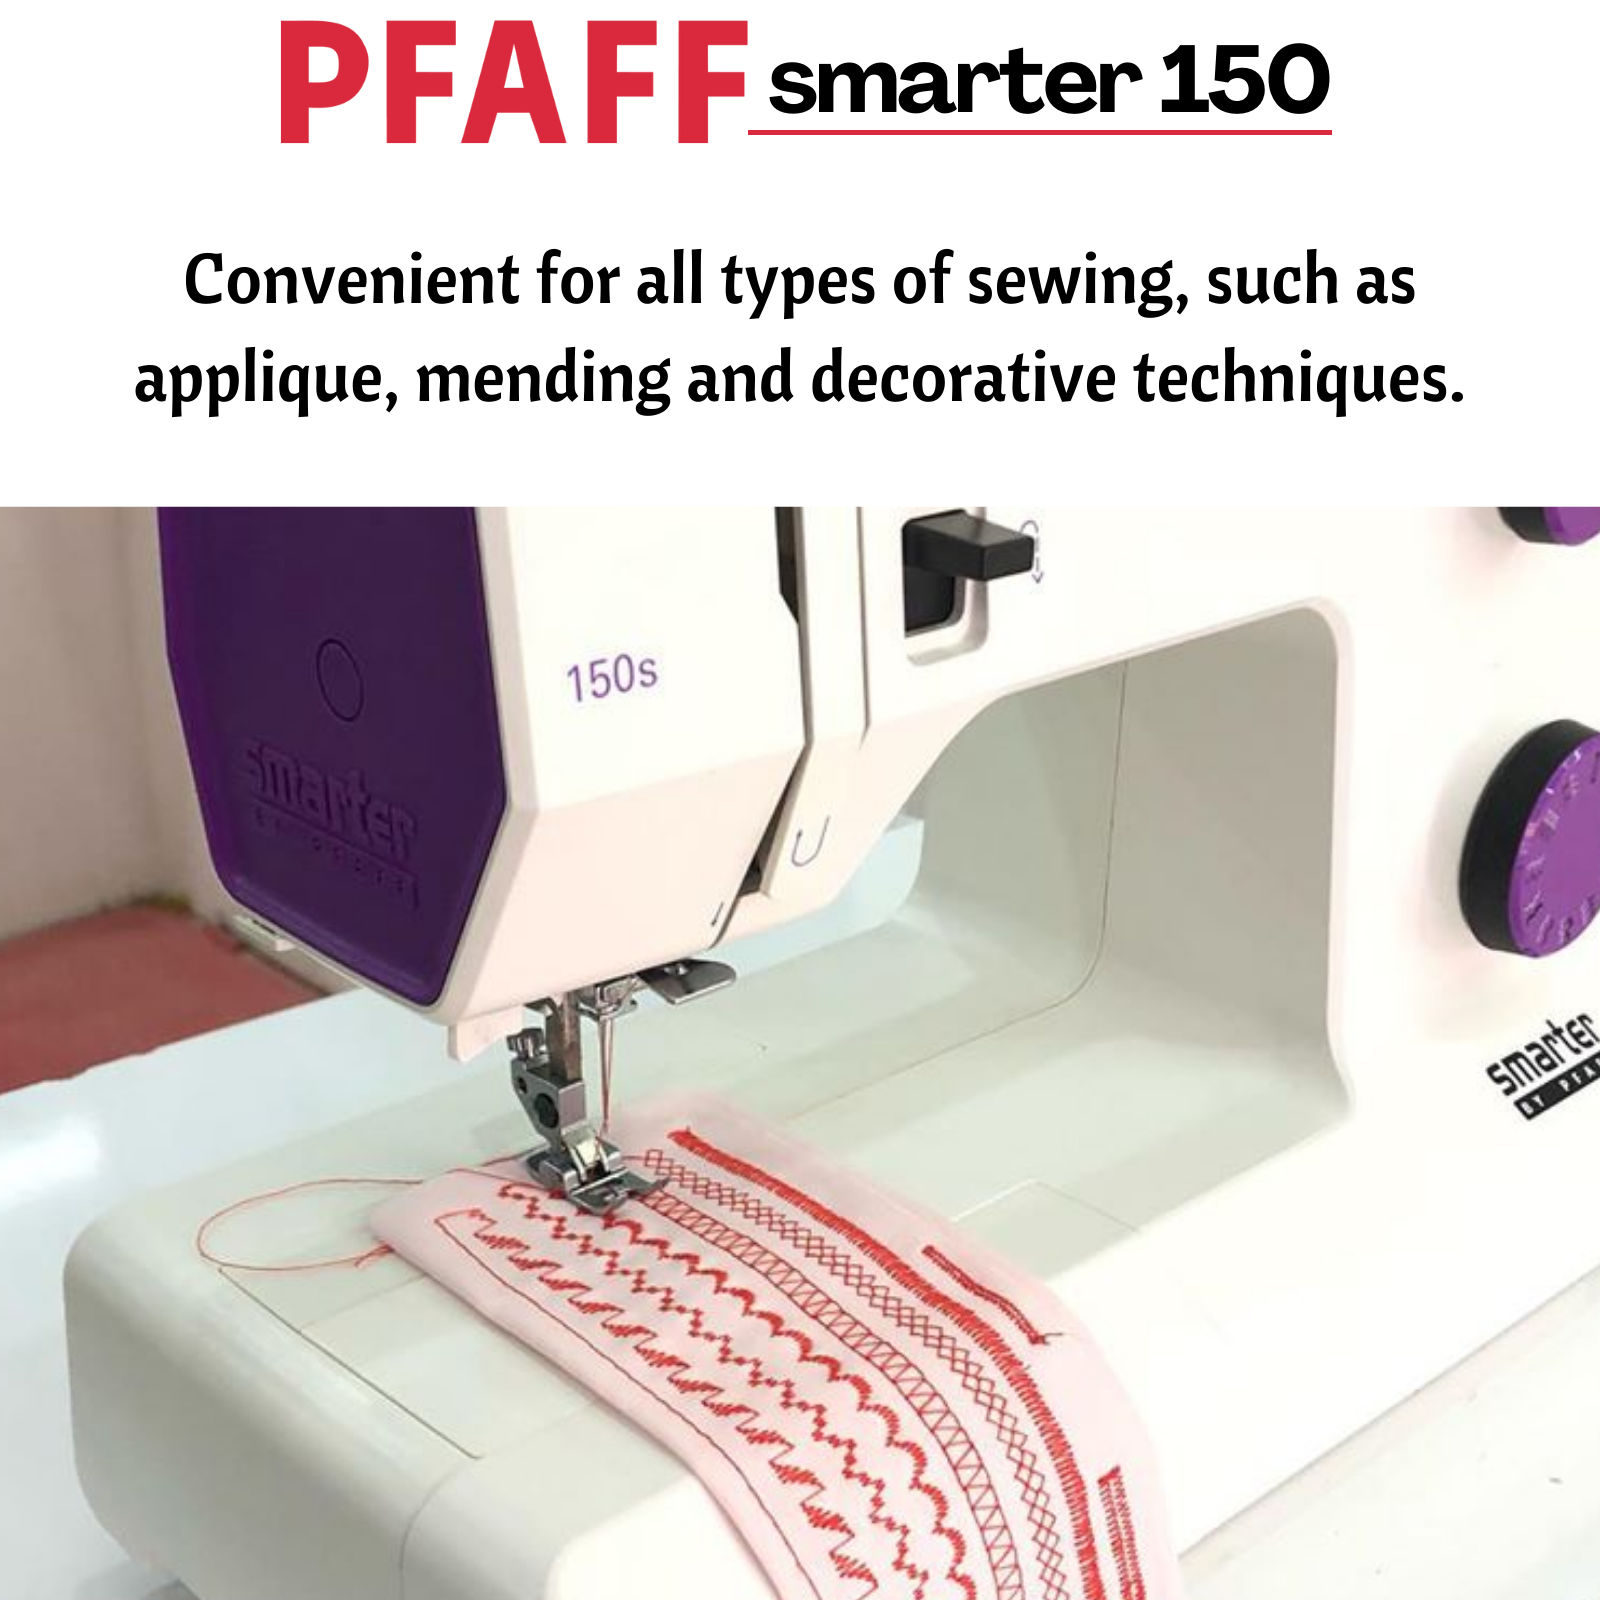 Pfaff Smarter 150 Sewing Machine, 23 Stitches, Buttonhole, Free-Arm